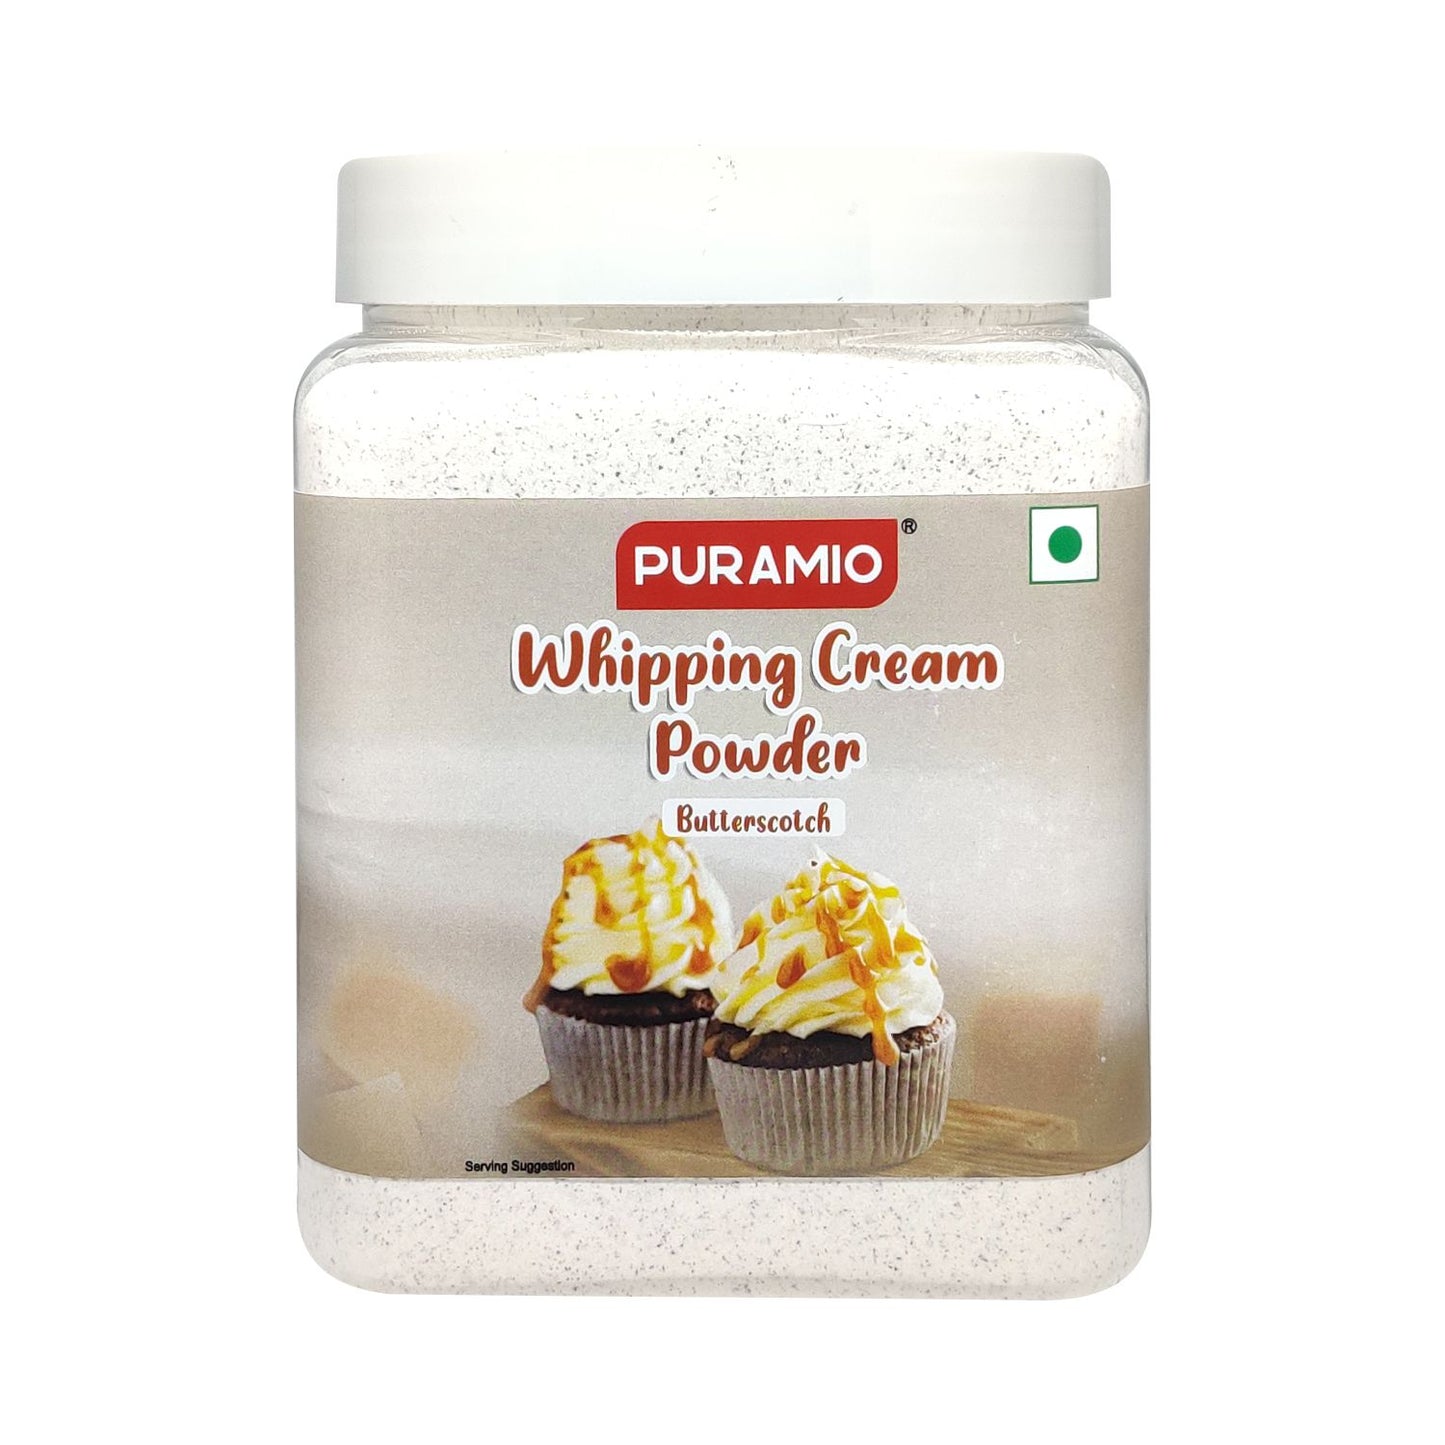 Puramio Whipping Cream Powder (Butterscotch)